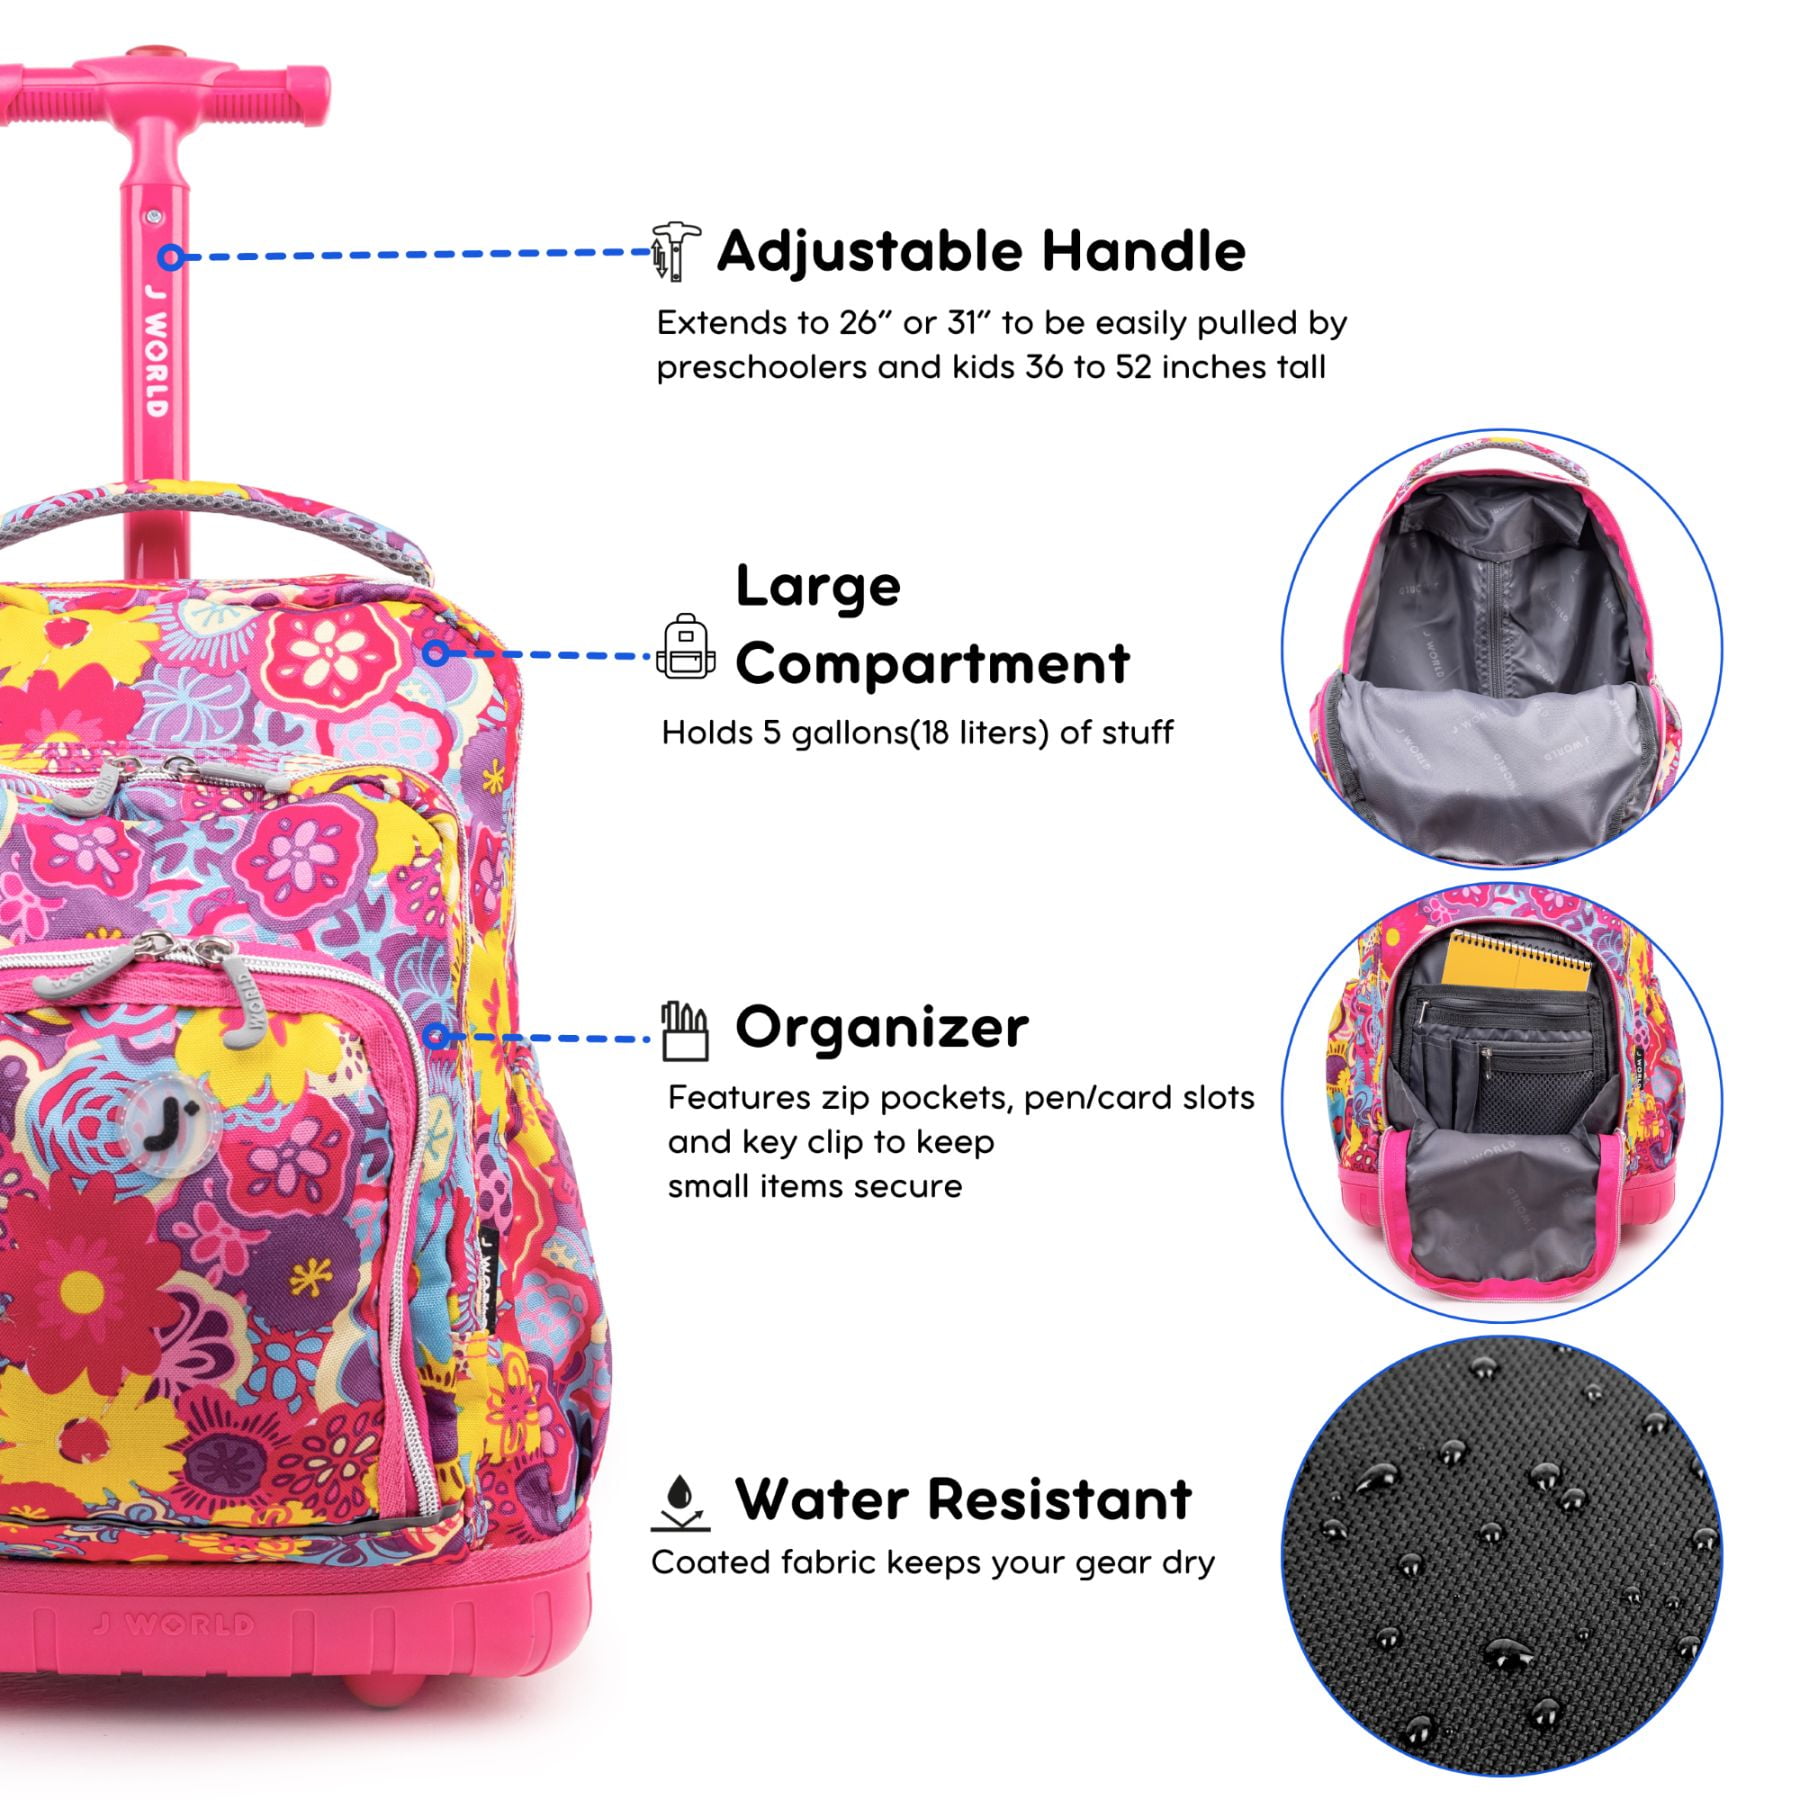 Pzuqiu Elephant Backpack Lunch Bag Combo for School Kids Girls